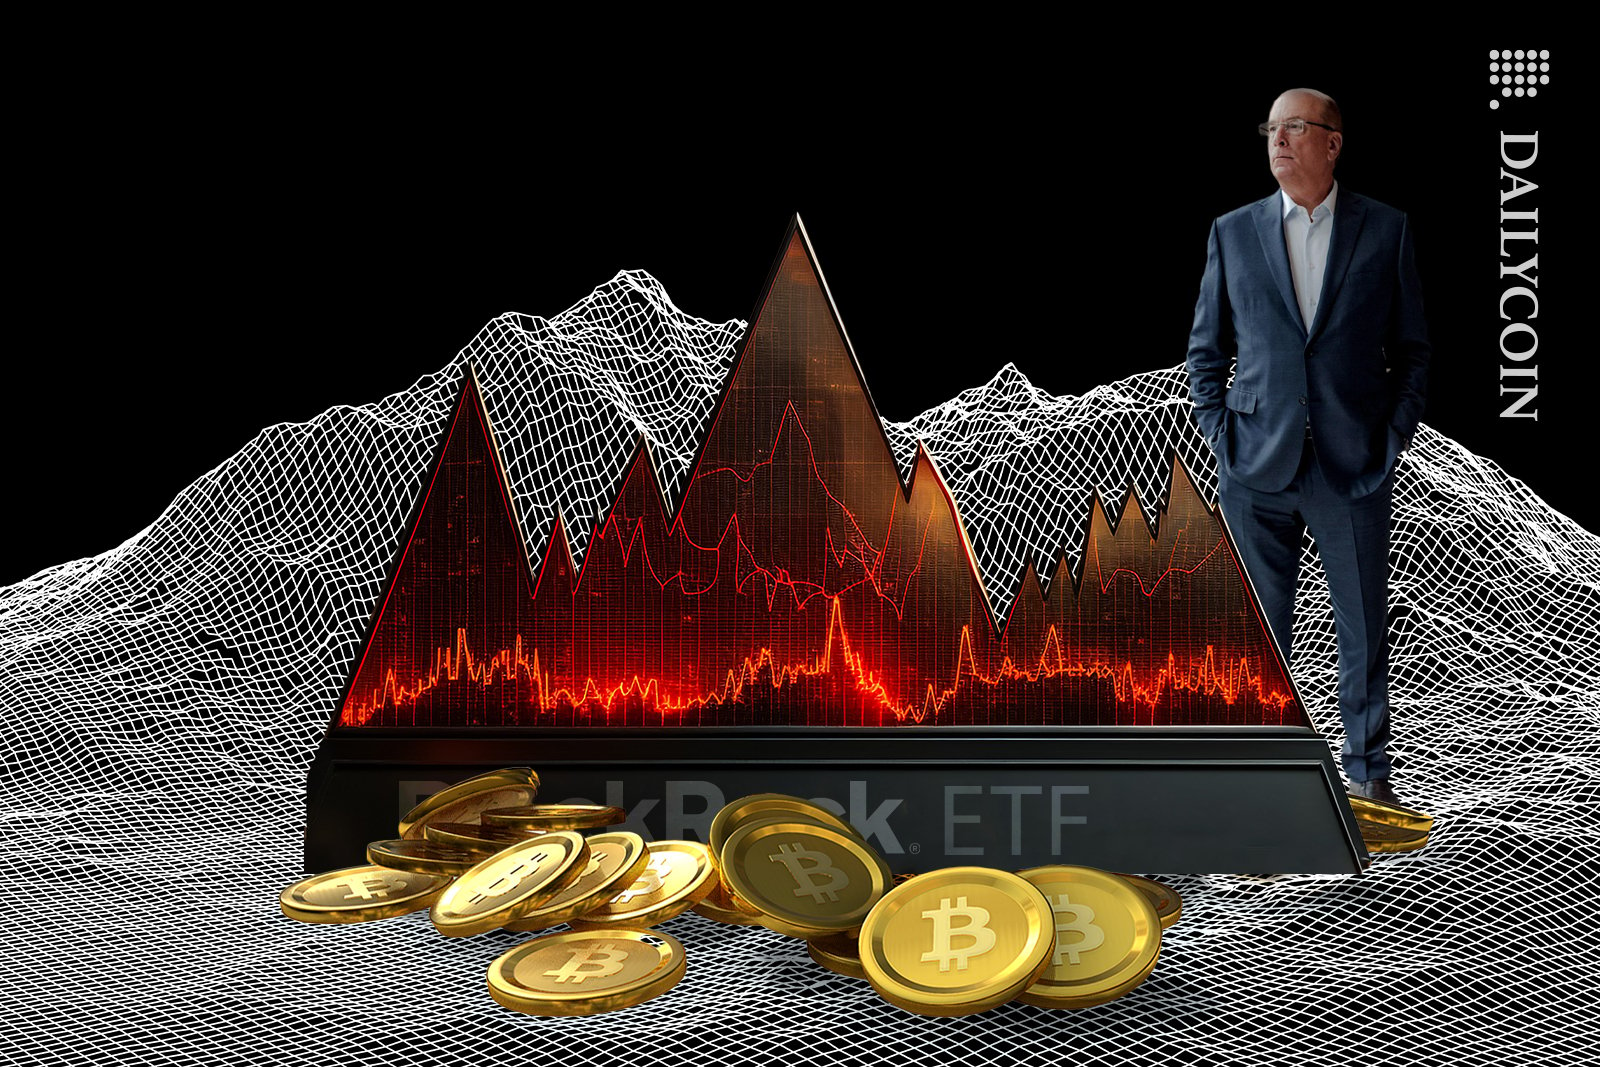 Larry Fink standing next to Black rocks Bitcoin ETF chart.